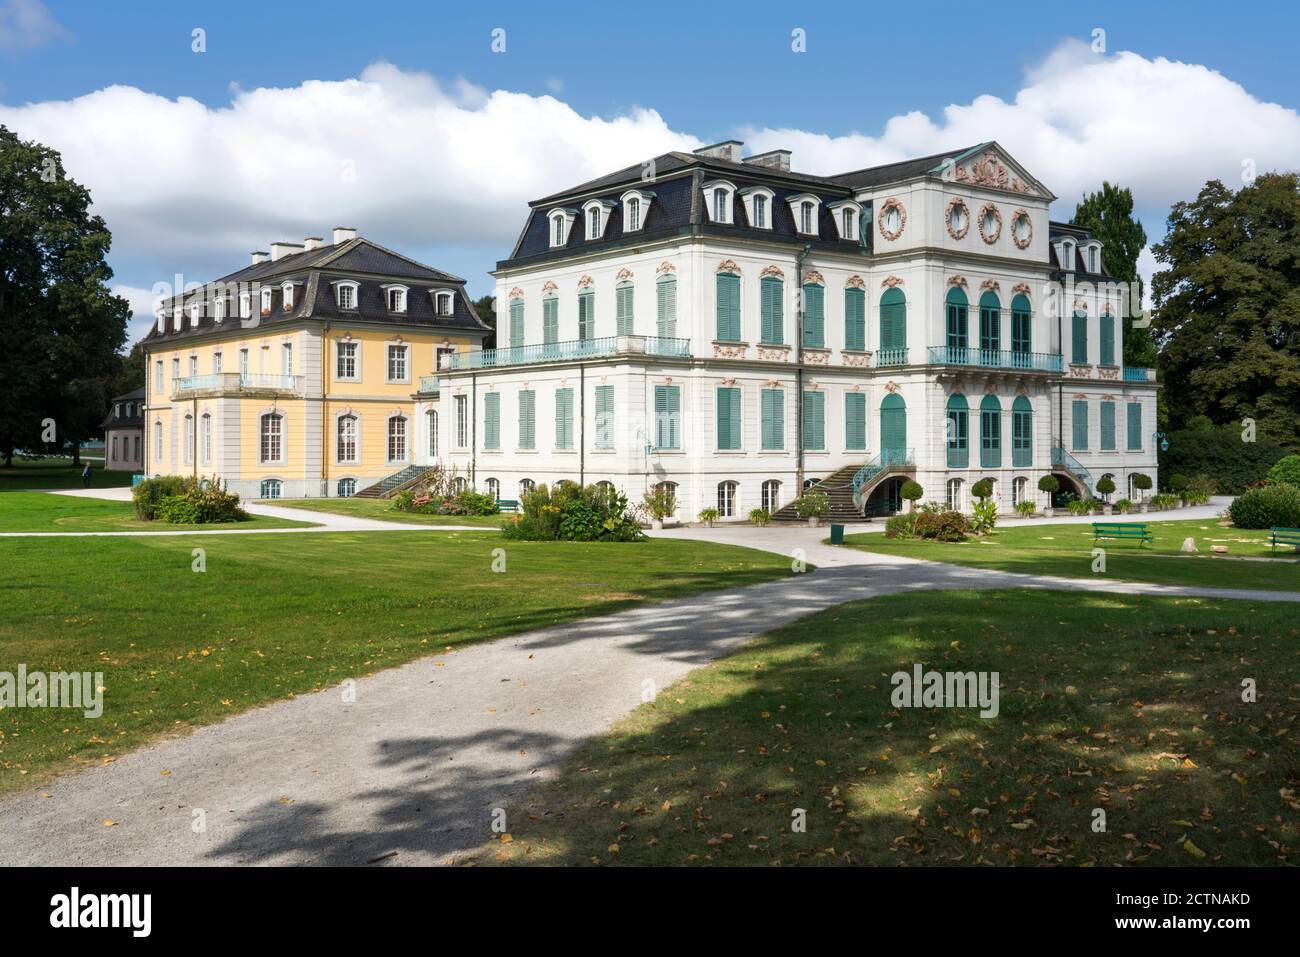 Schloss Wilhelmsthal, Wilhelmsthal Palace, Calden, Hesse, Germany, Europe Stock Photo